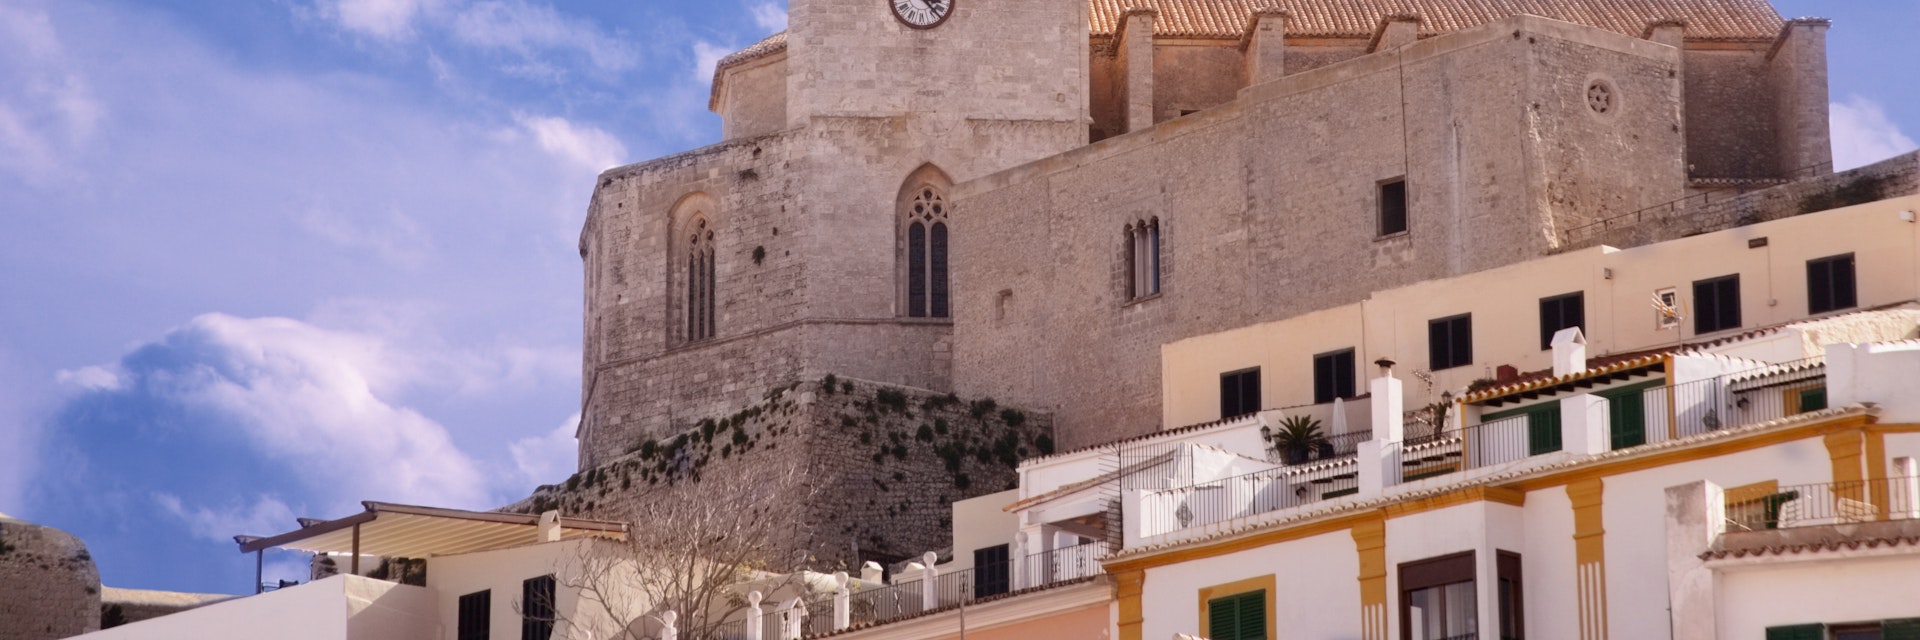 Ibiza Cathedral, Catedral d'Eivissa, Dalt Vila.